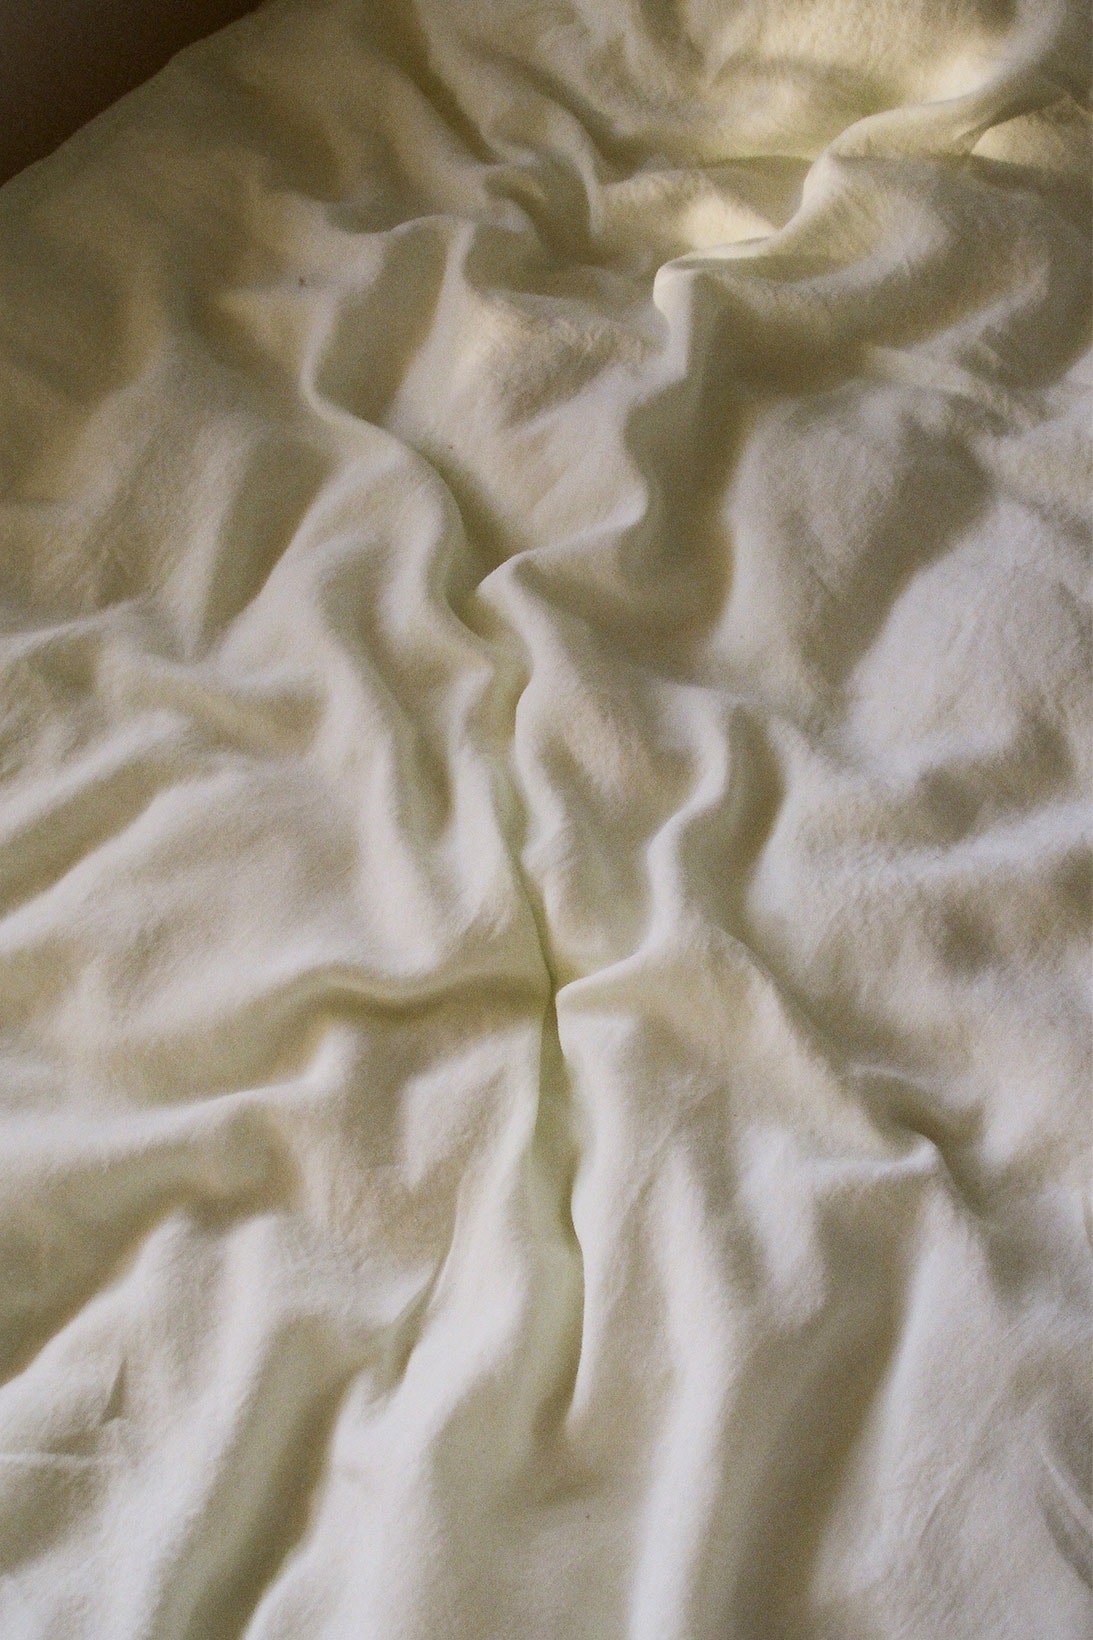 tekla summer linen bedding collection sheets ivory cream